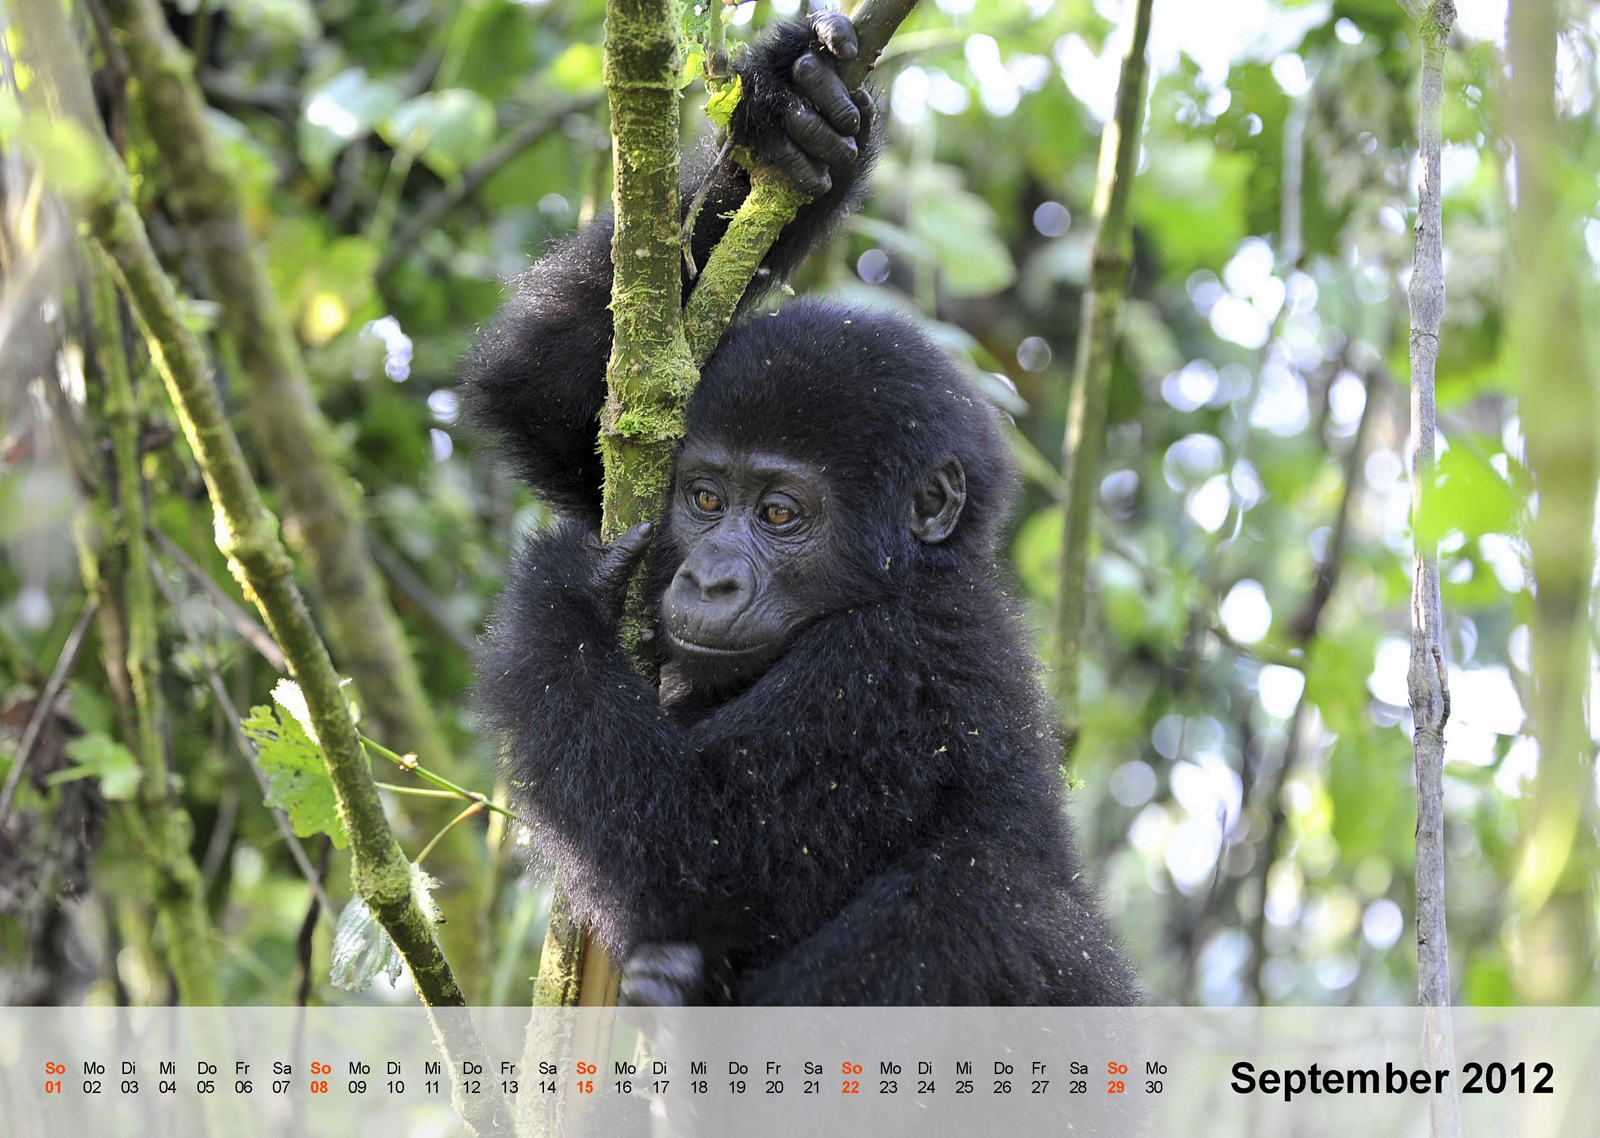 Berggorilla | Mountain gorilla | Bwindi Impenetrable National Park | Uganda - Kalender 2012 - September